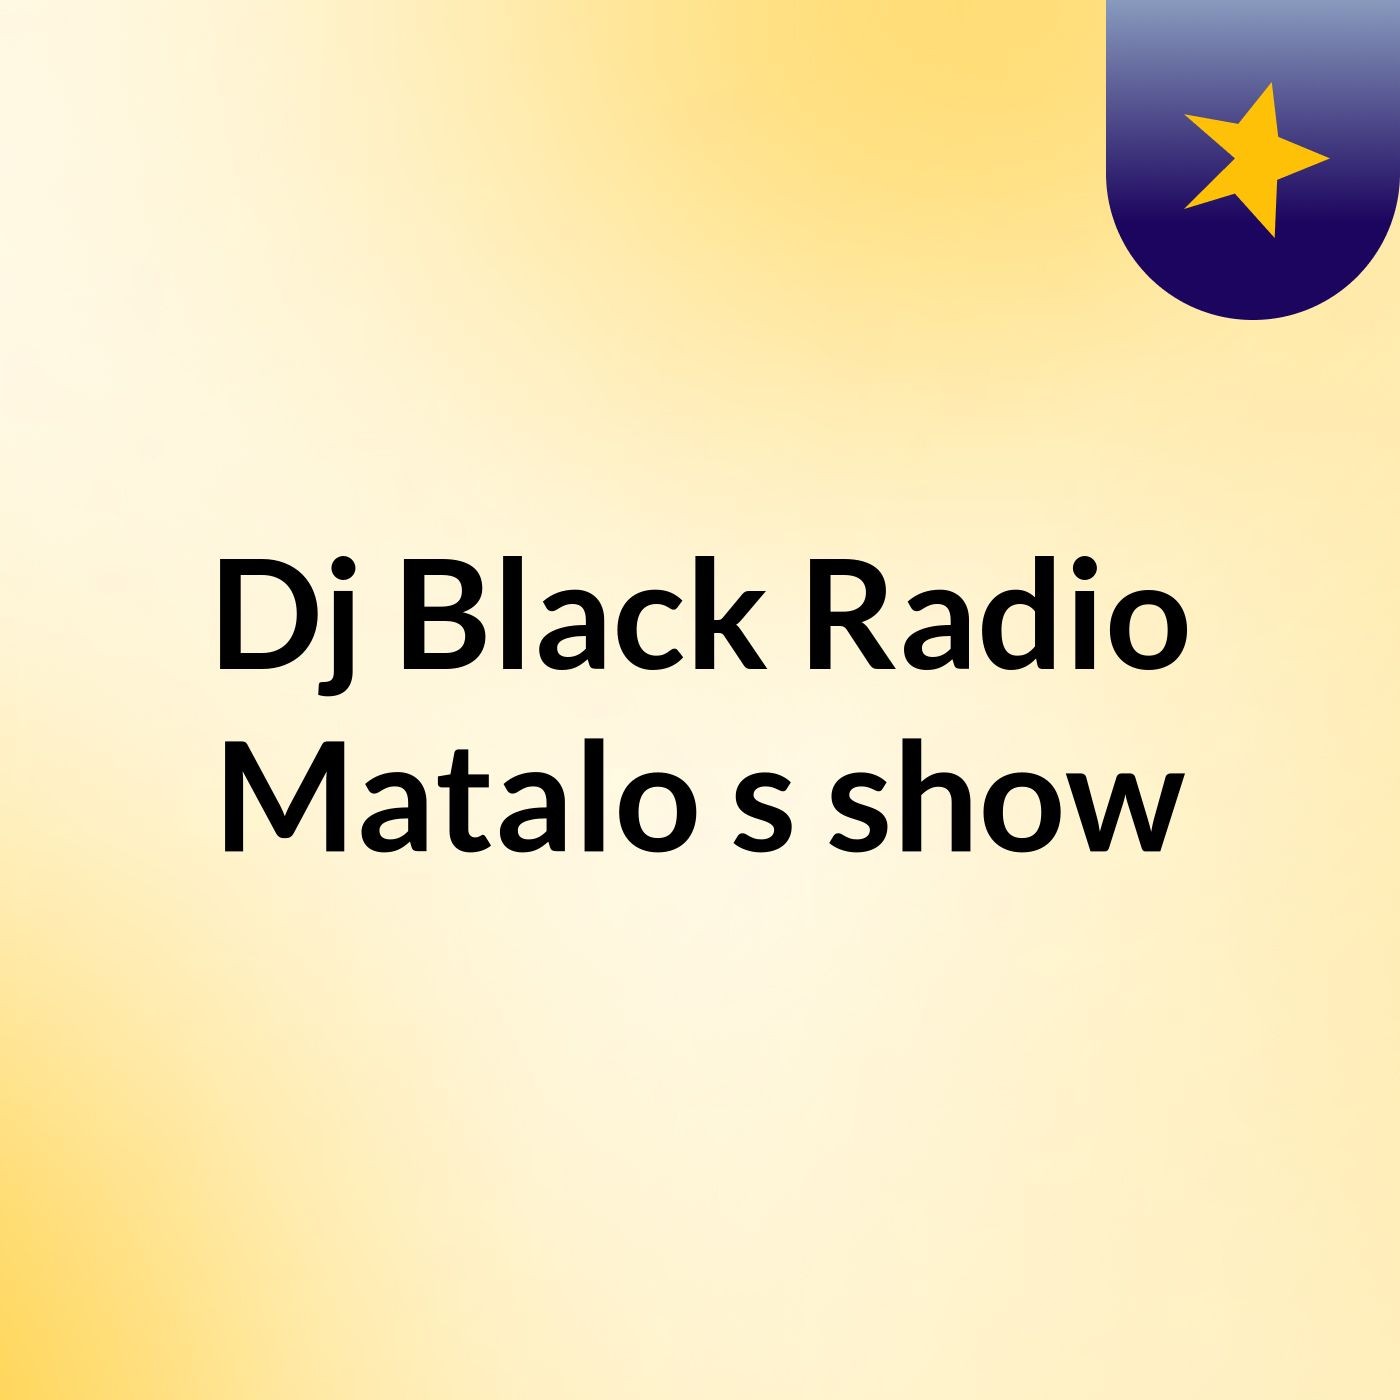 Dj Black Radio Matalo's show